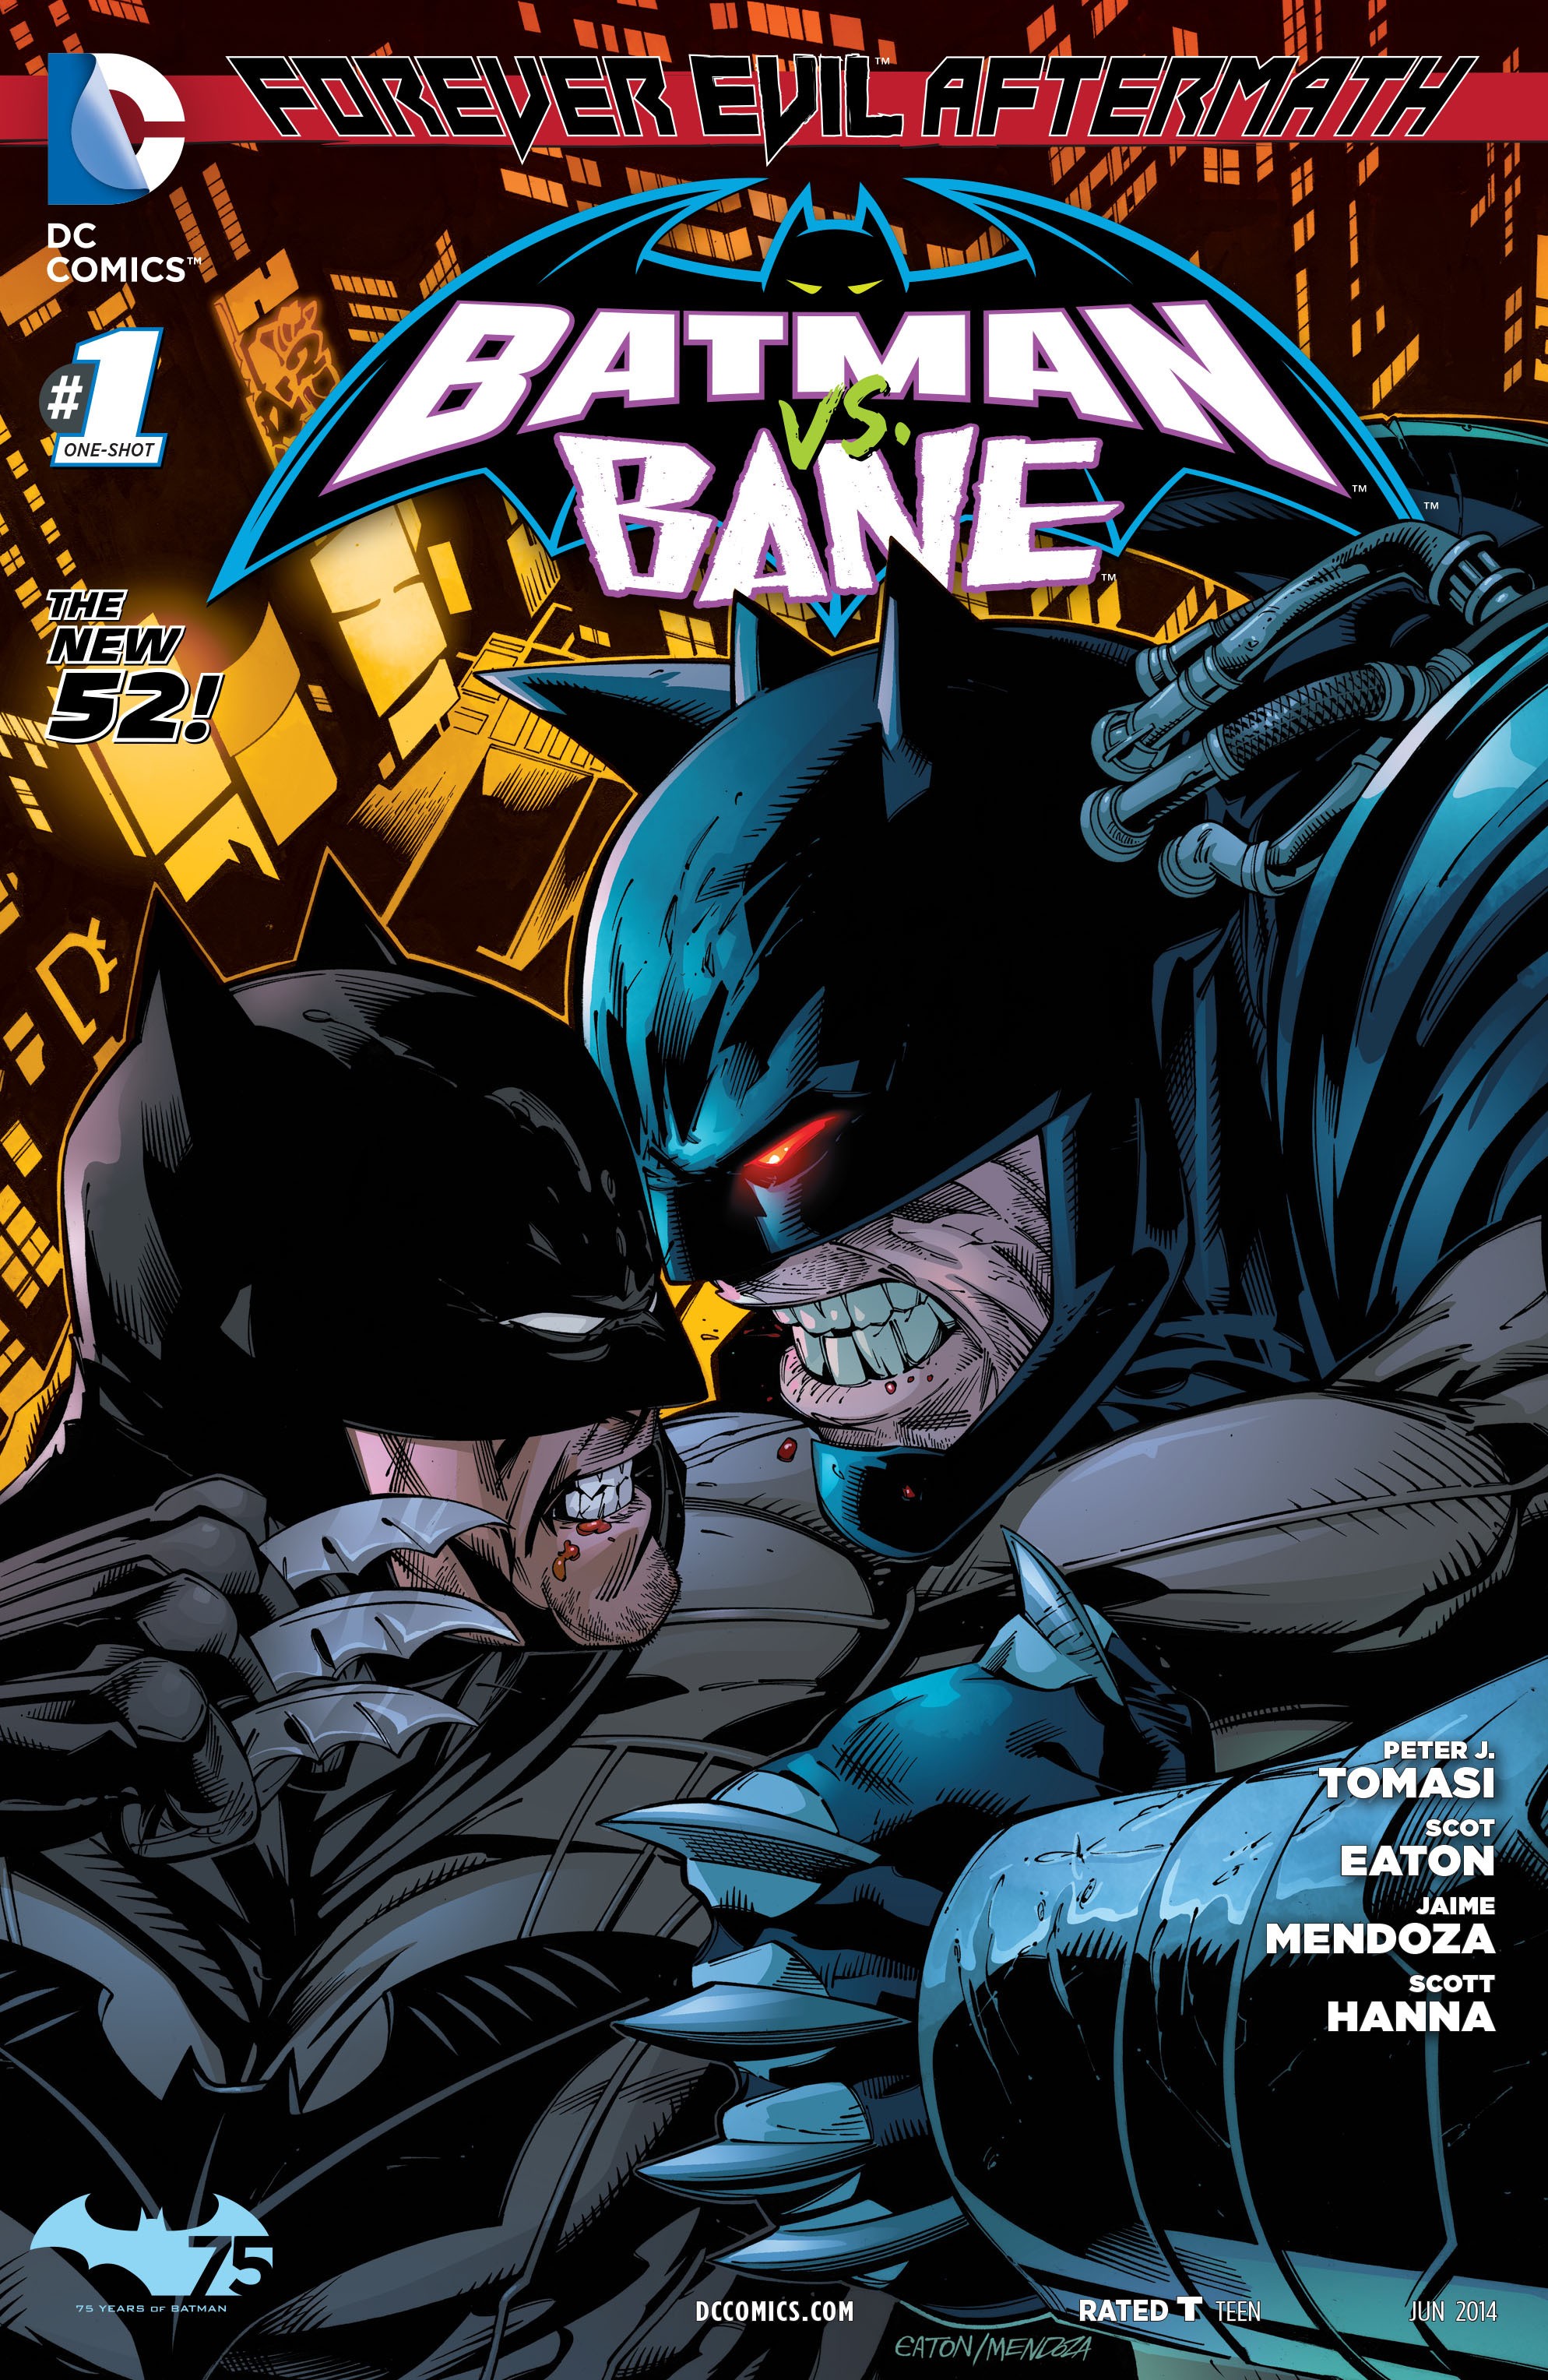 Forever Evil Aftermath: Batman vs. Bane Vol. 1 #1